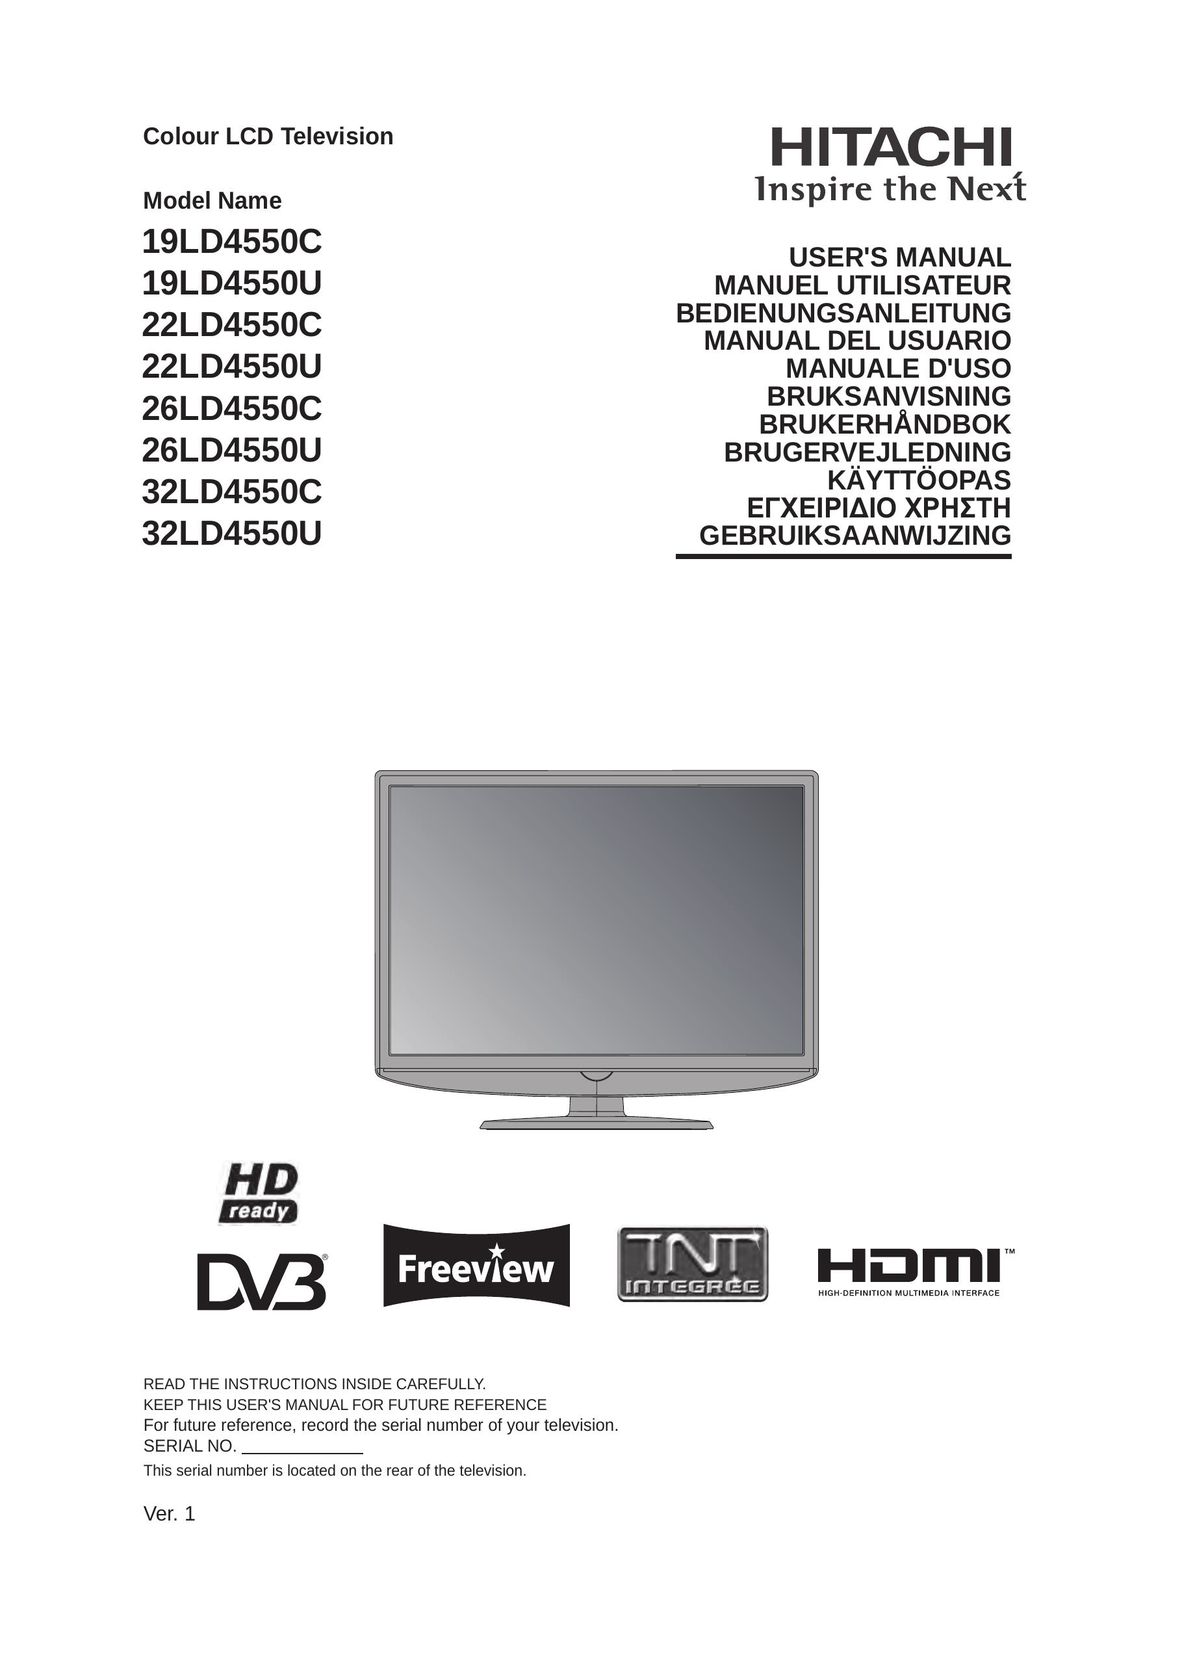 Hitachi 32LD4550U Flat Panel Television User Manual